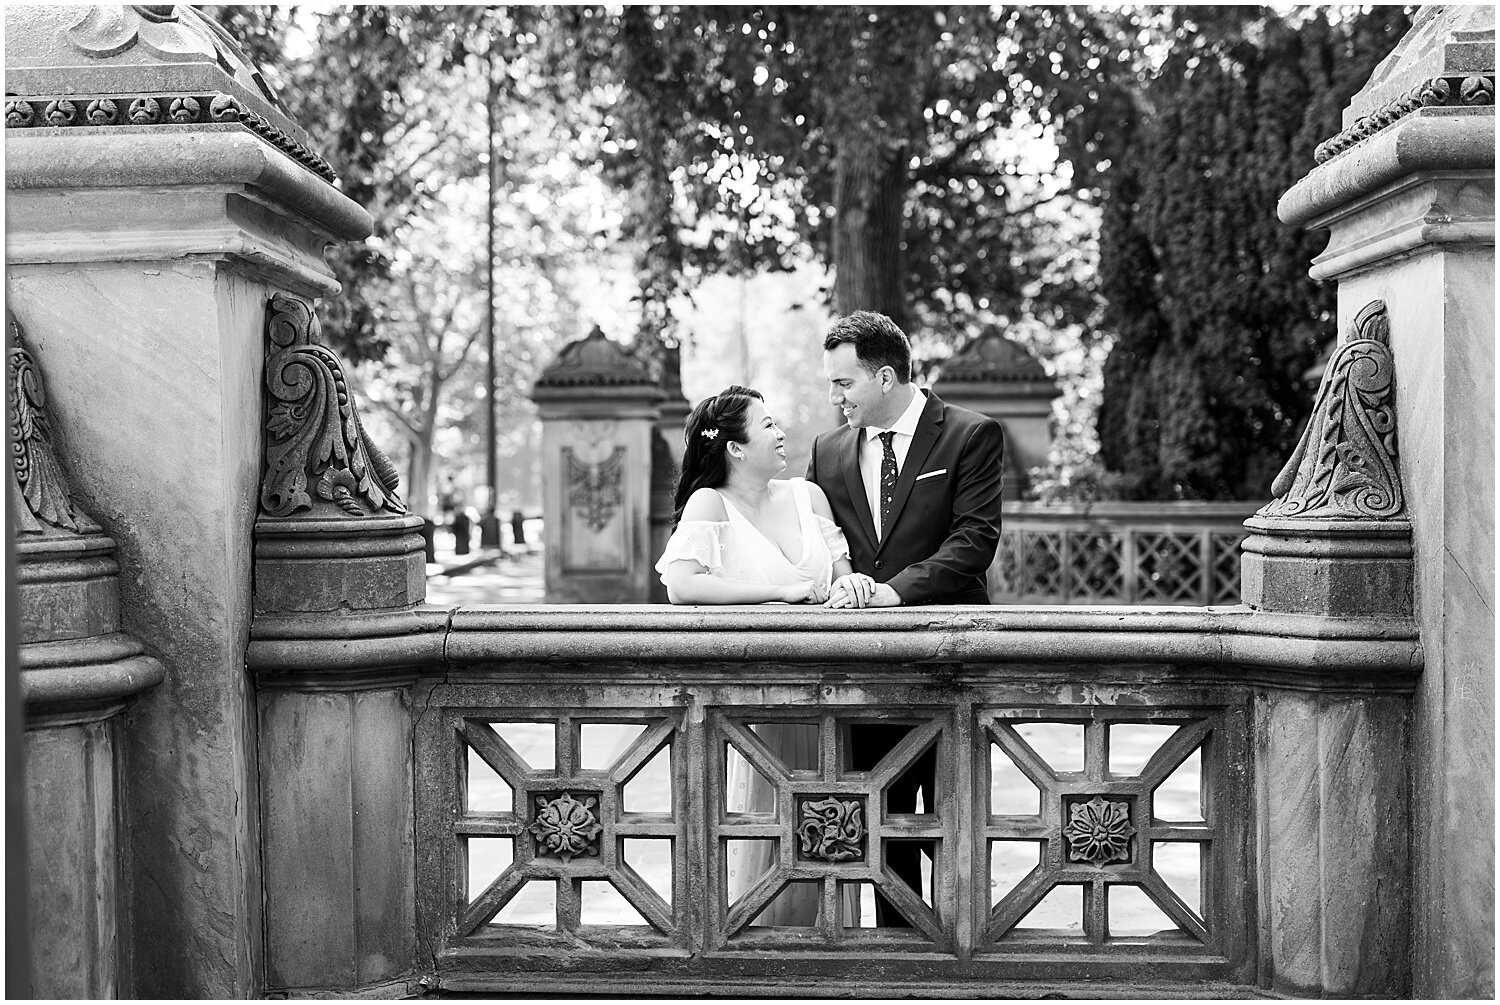 Bethesda Terrace and Fountain Wedding Photography